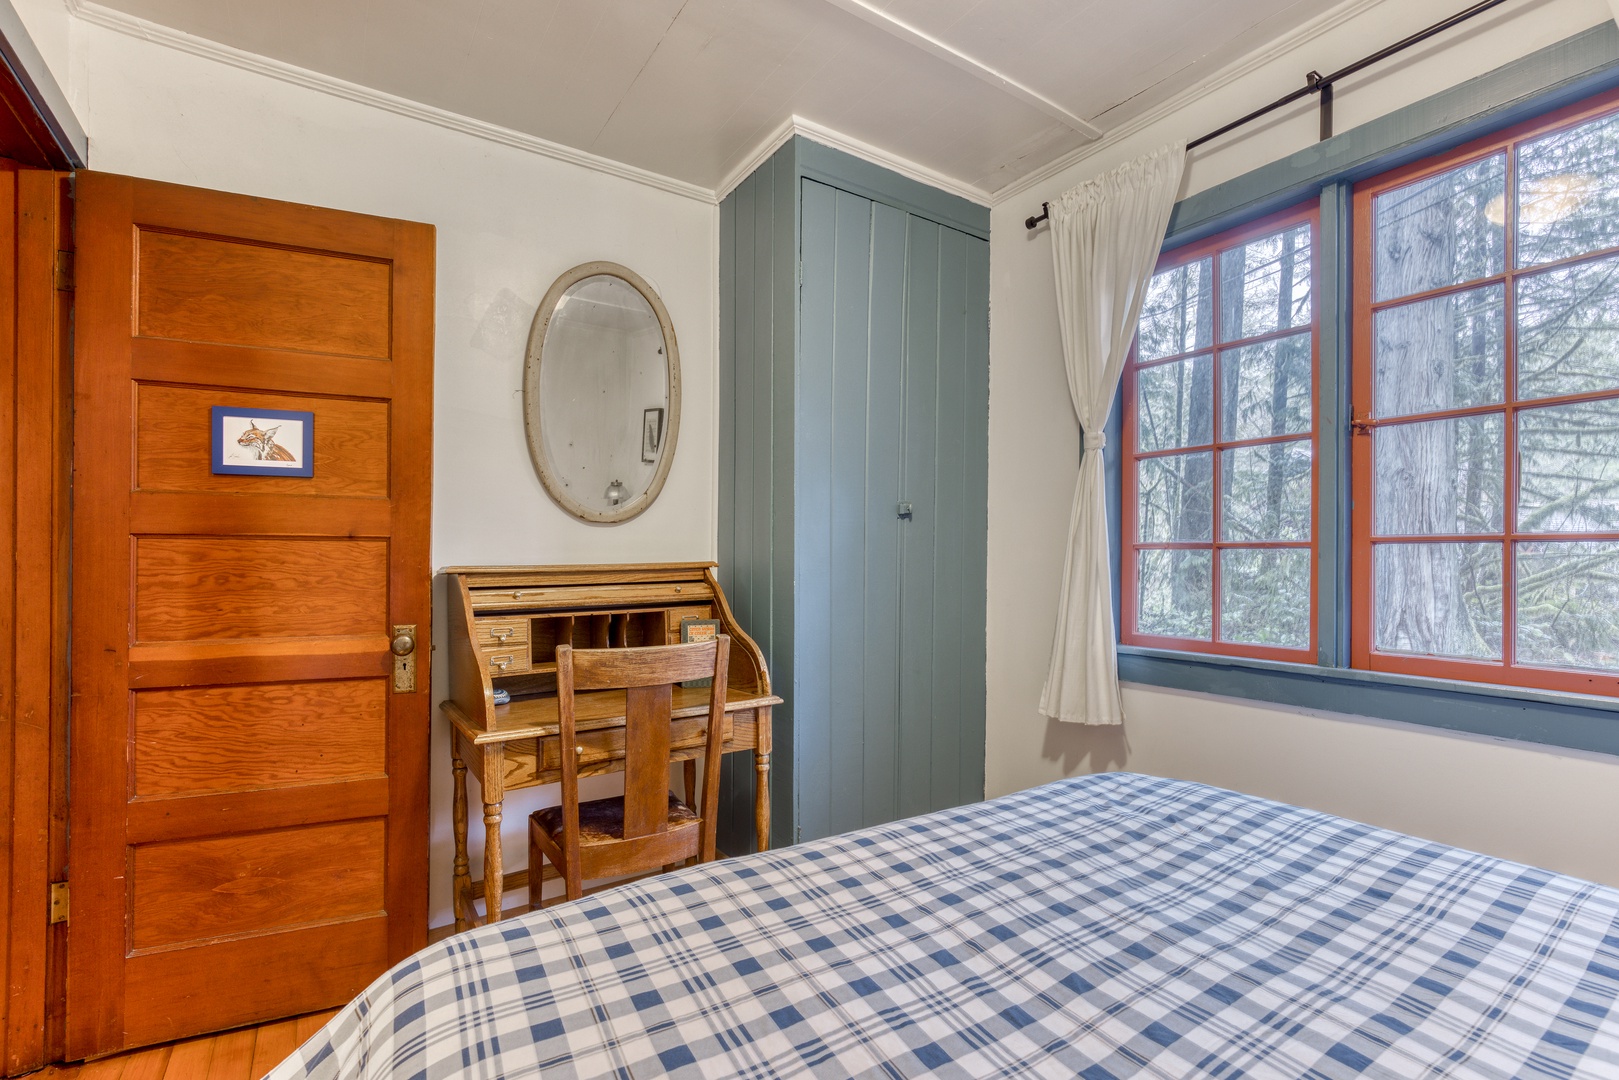 Brightwood Vacation Rentals, Springbrook Cabin - Guest bedroom with queen bed